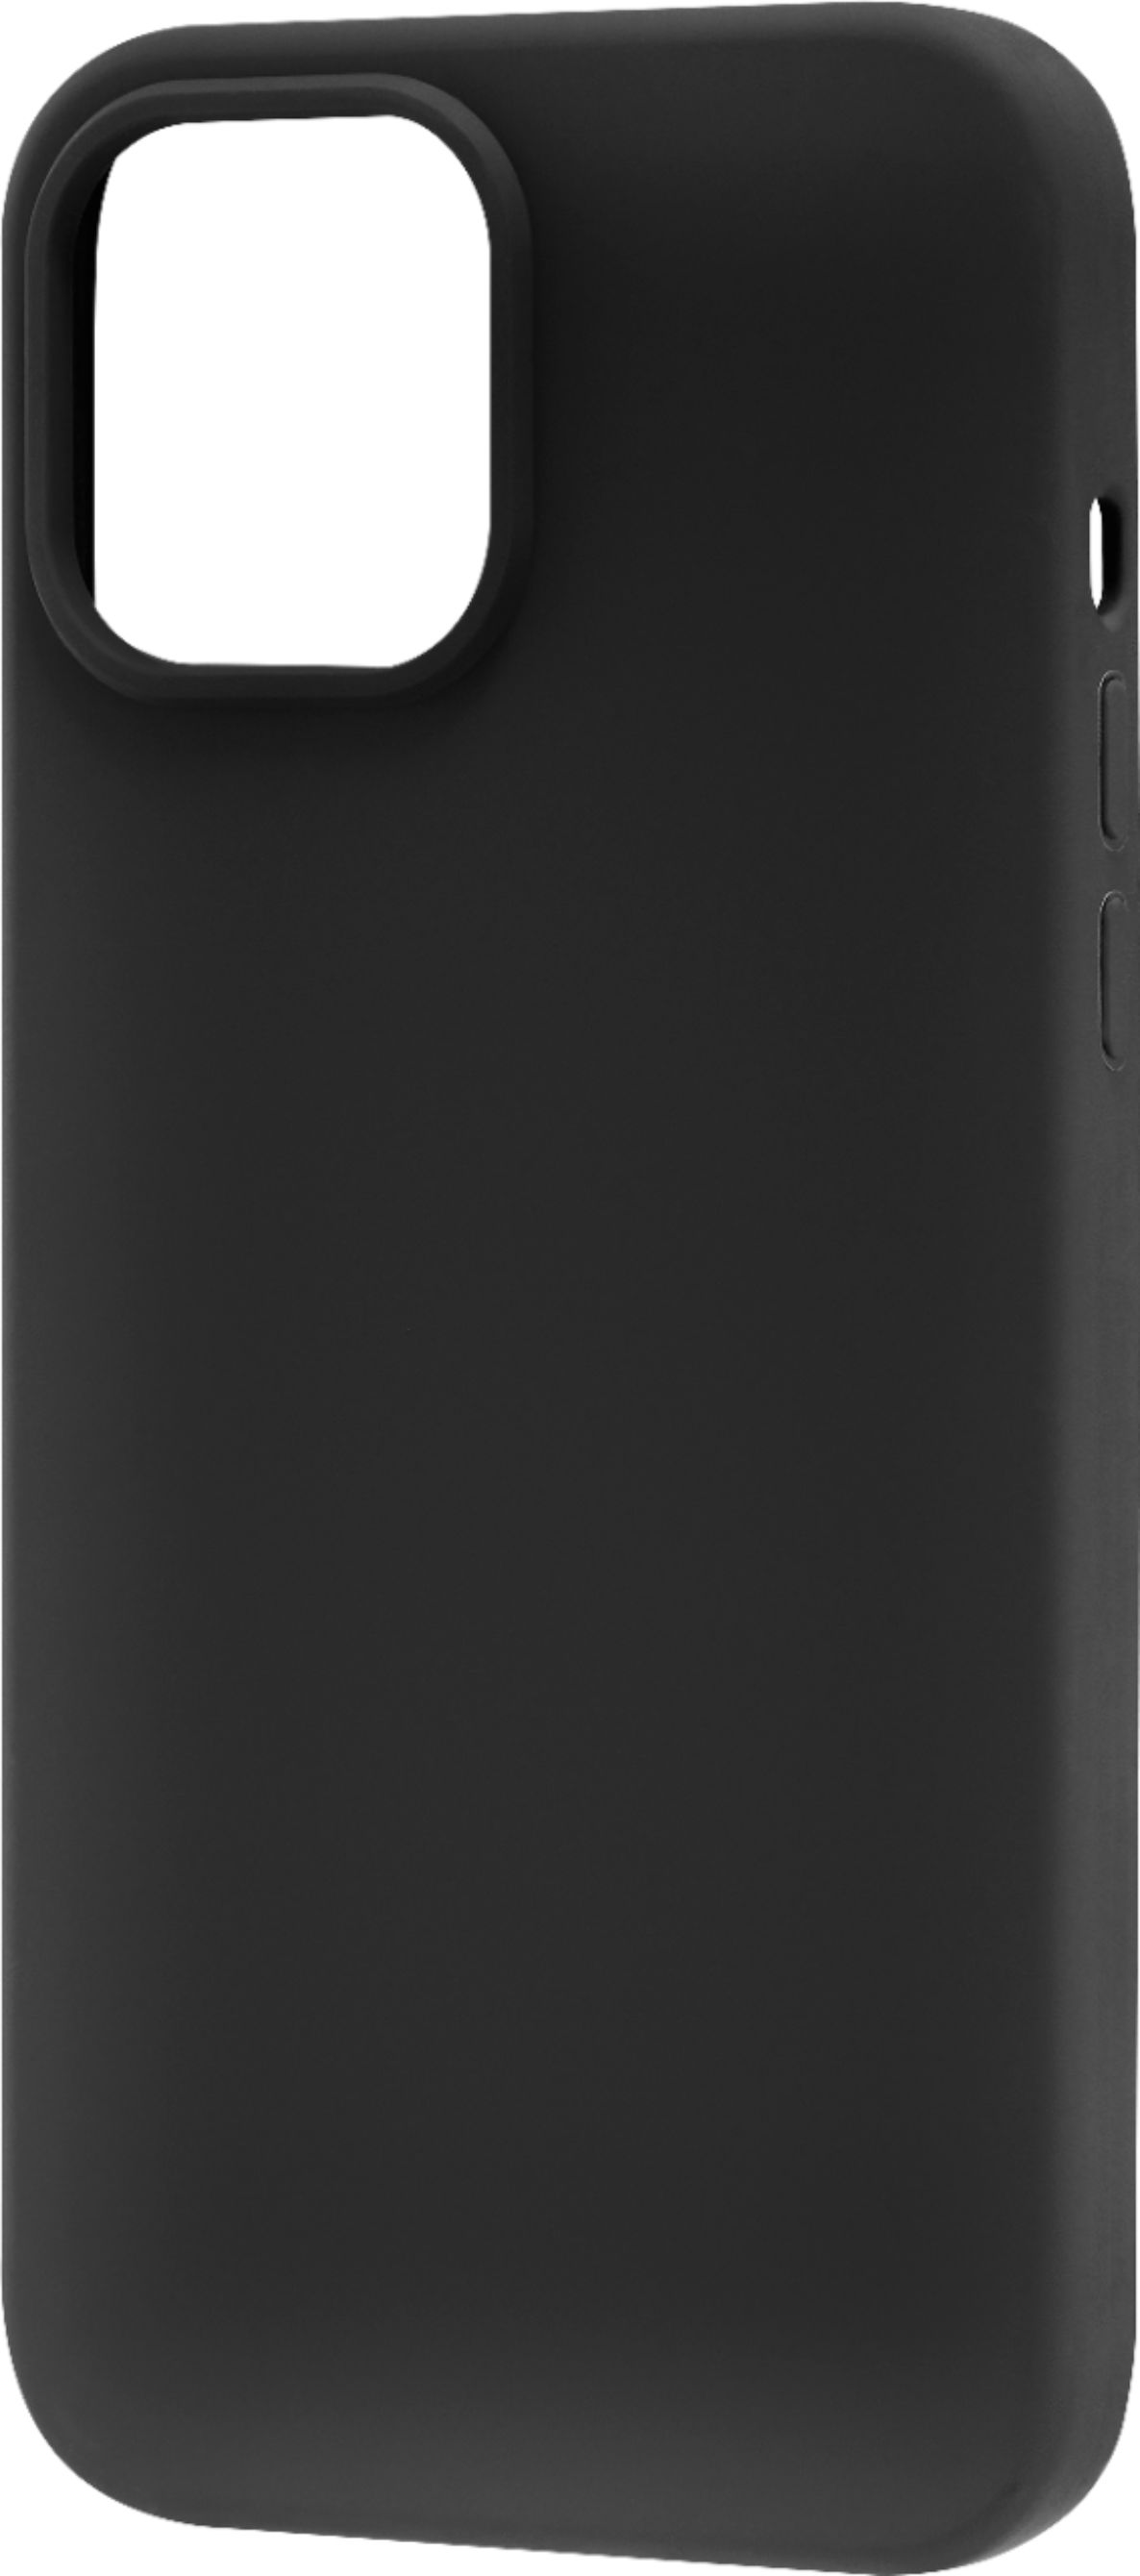 Modal™ - Liquid Silicone Case for Apple iPhone 12 Pro Max - Black